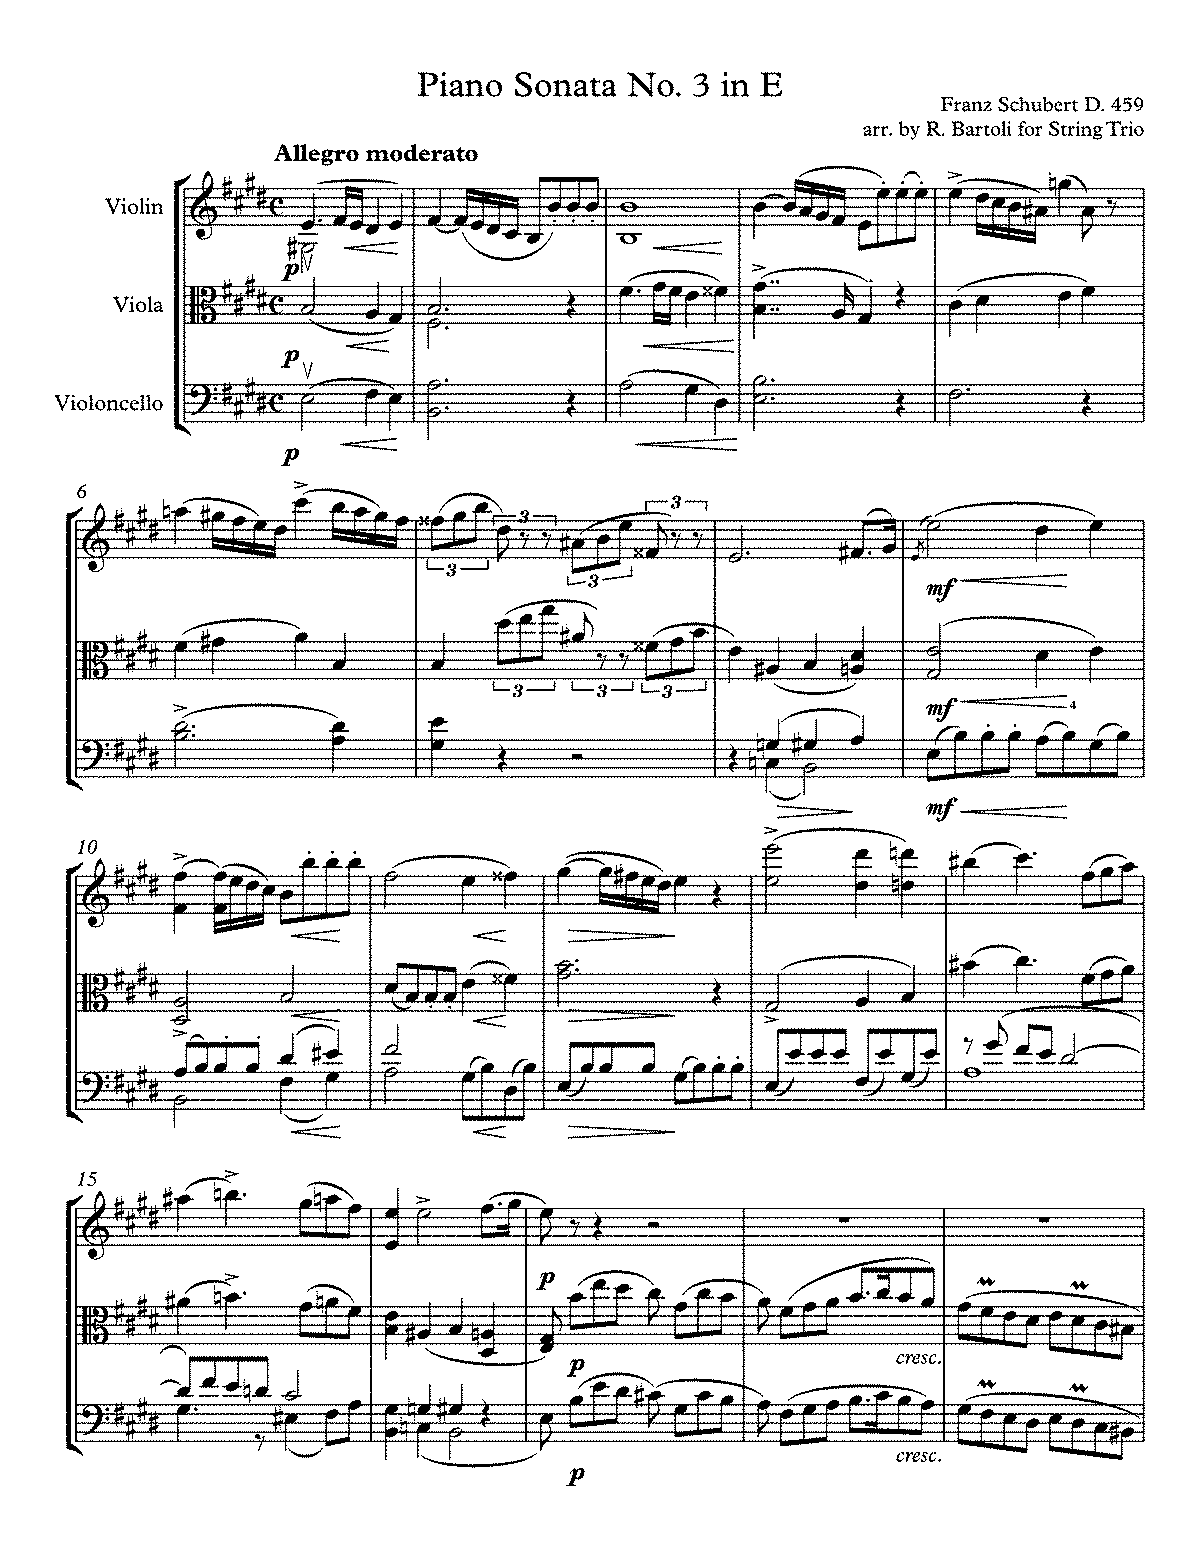 Piano Sonata in E major, D.459 (Schubert, Franz) - IMSLP